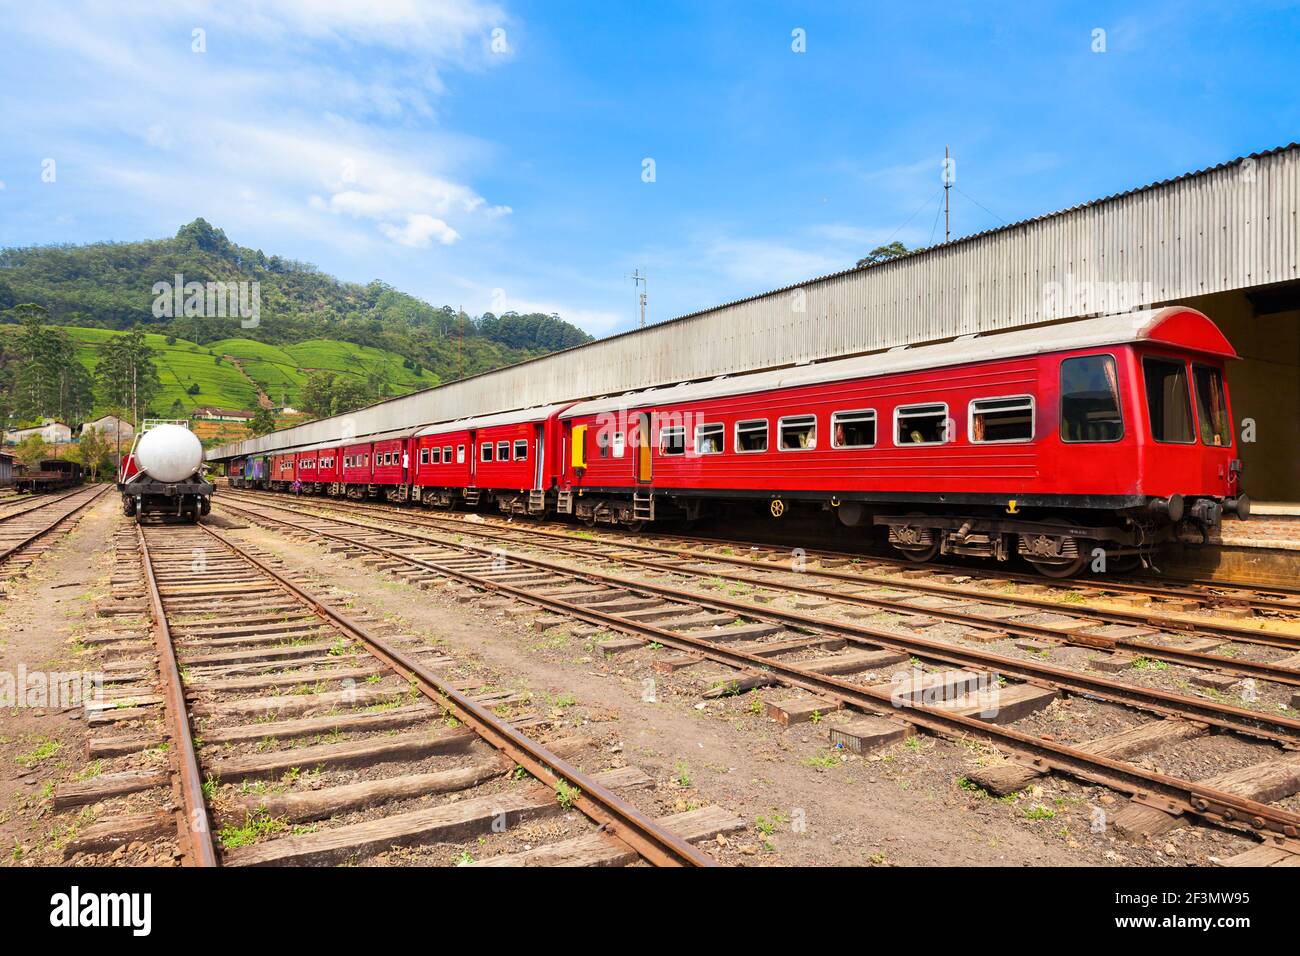 Train at the Nanu Oya railway station near Nuwara Eliya, Sri Lanka. It is the main railway station in Nuwara Eliya region. Stock Photo